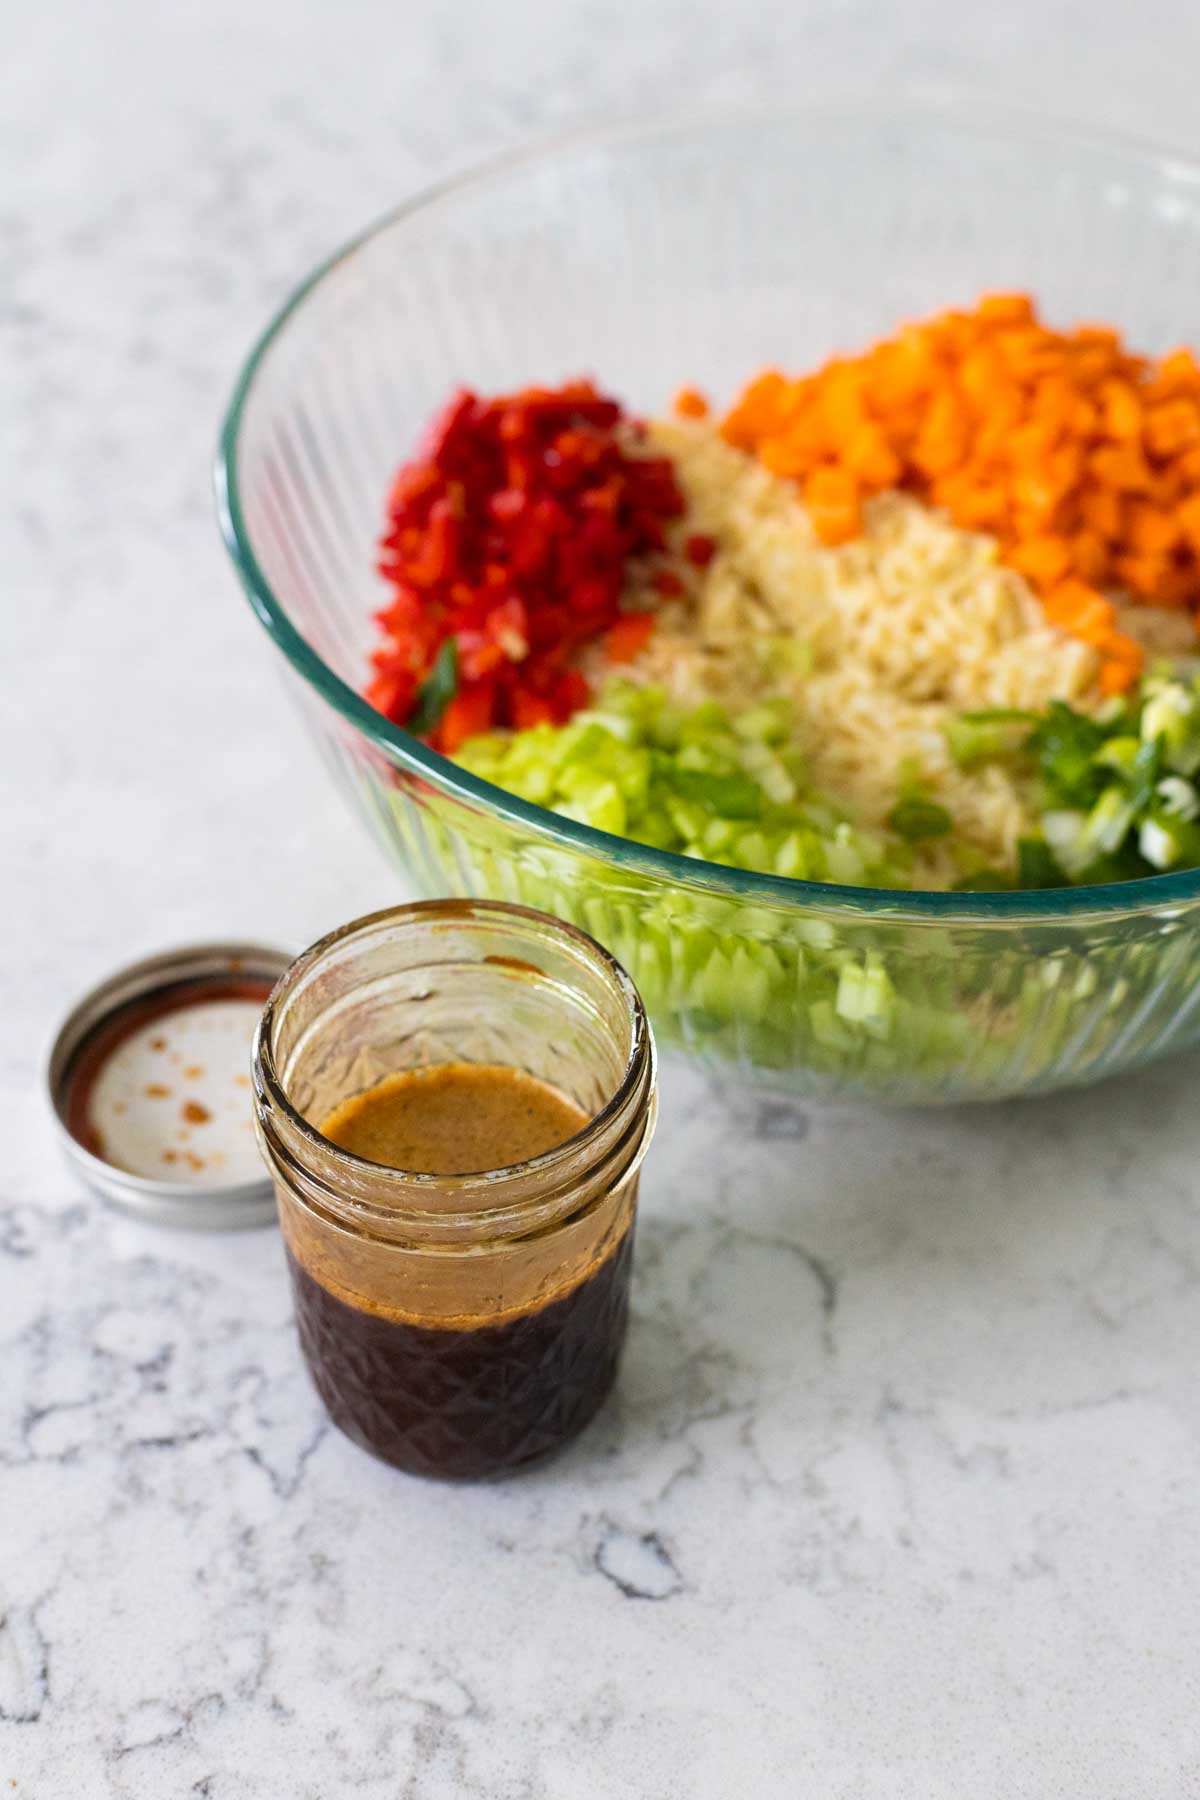 The mason jar of Asian marinade sits next to a mixing bowl filled with pasta salad and raw veggies.